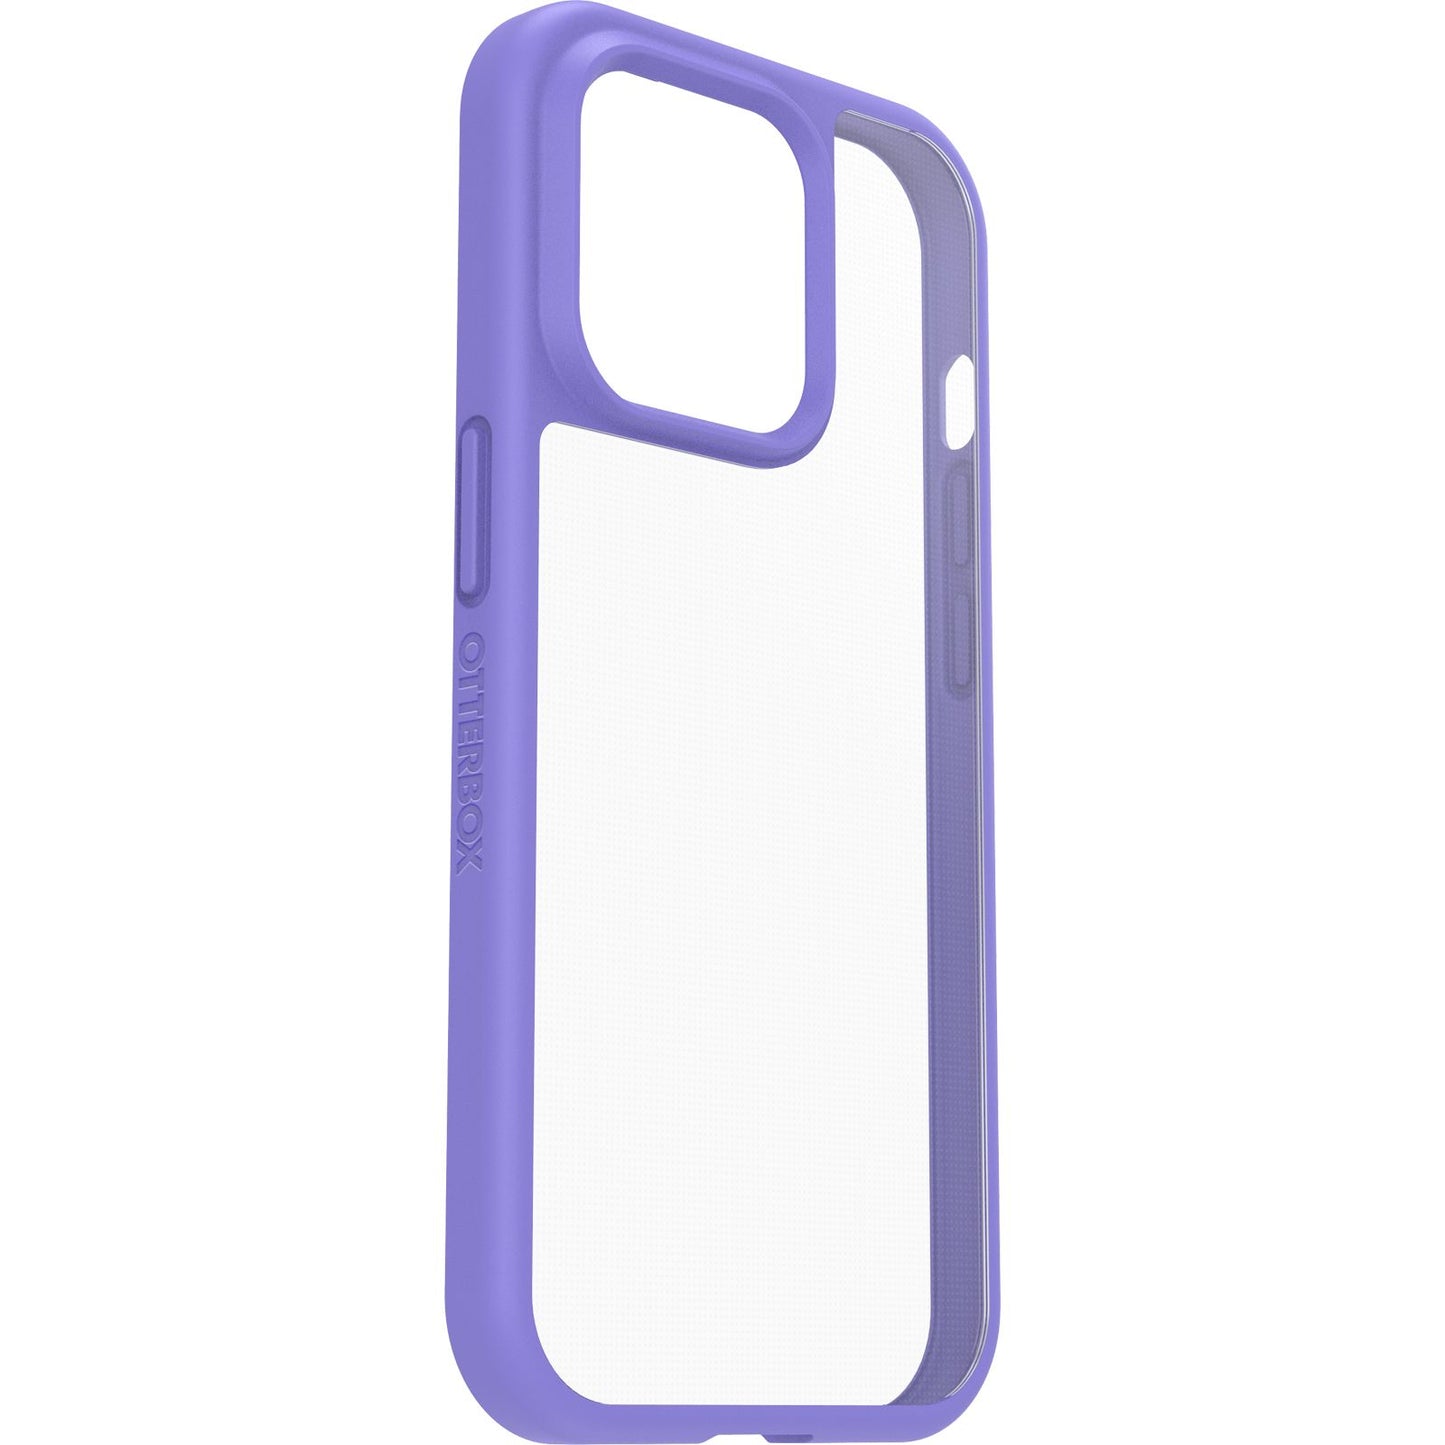 Otterbox React Case - Apple iPhone 14 Pro  / Clear Purple